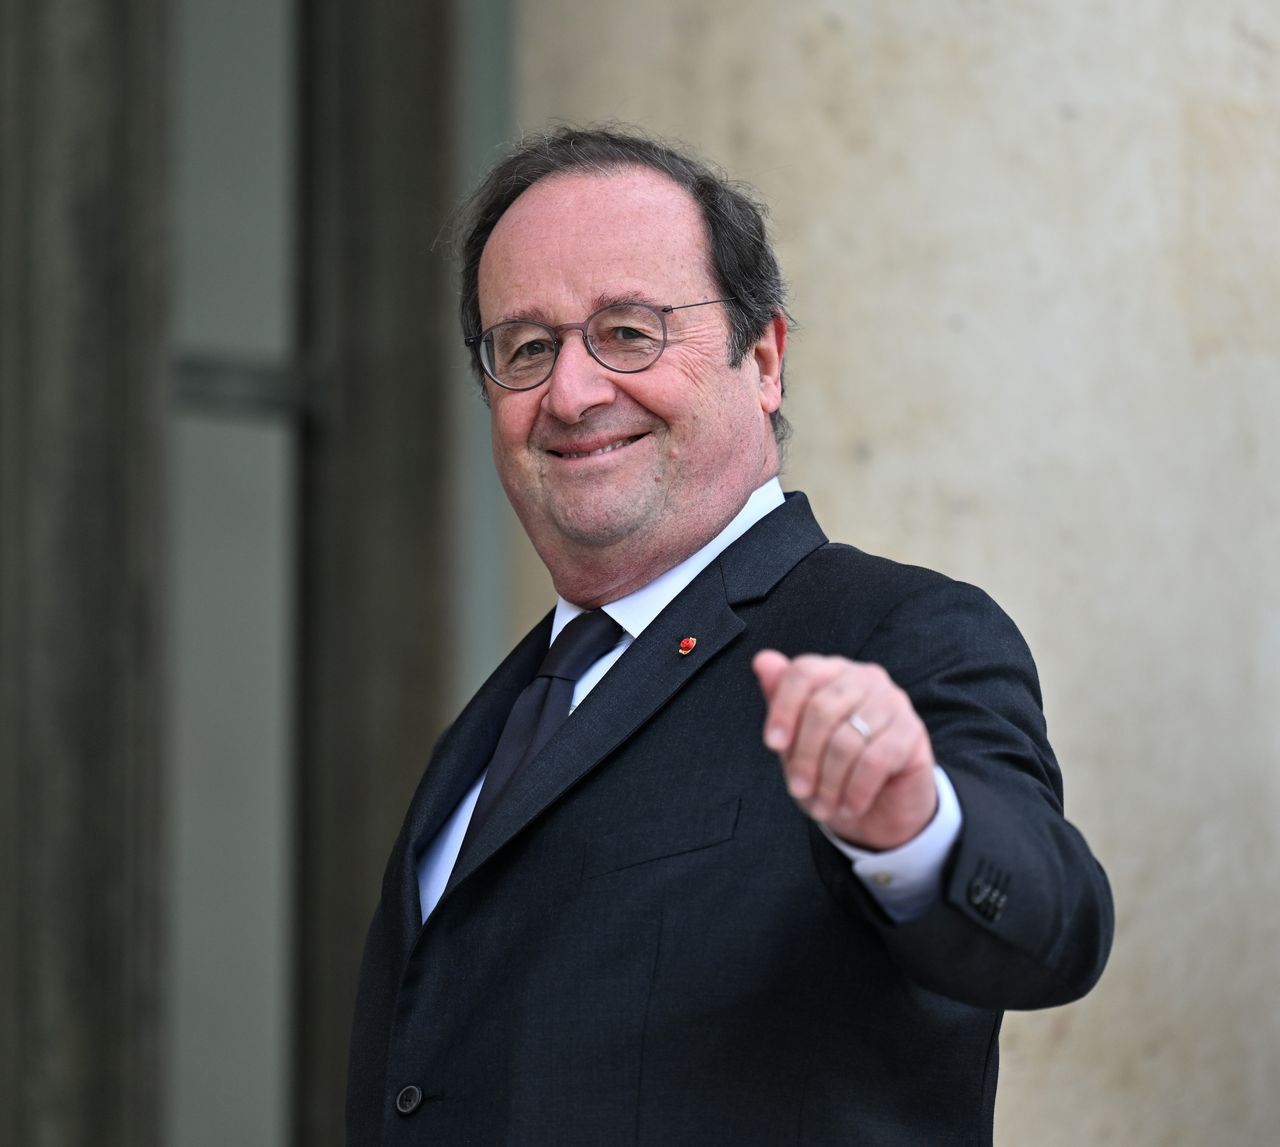 Historic scooter of former president Hollande sells for $27,000